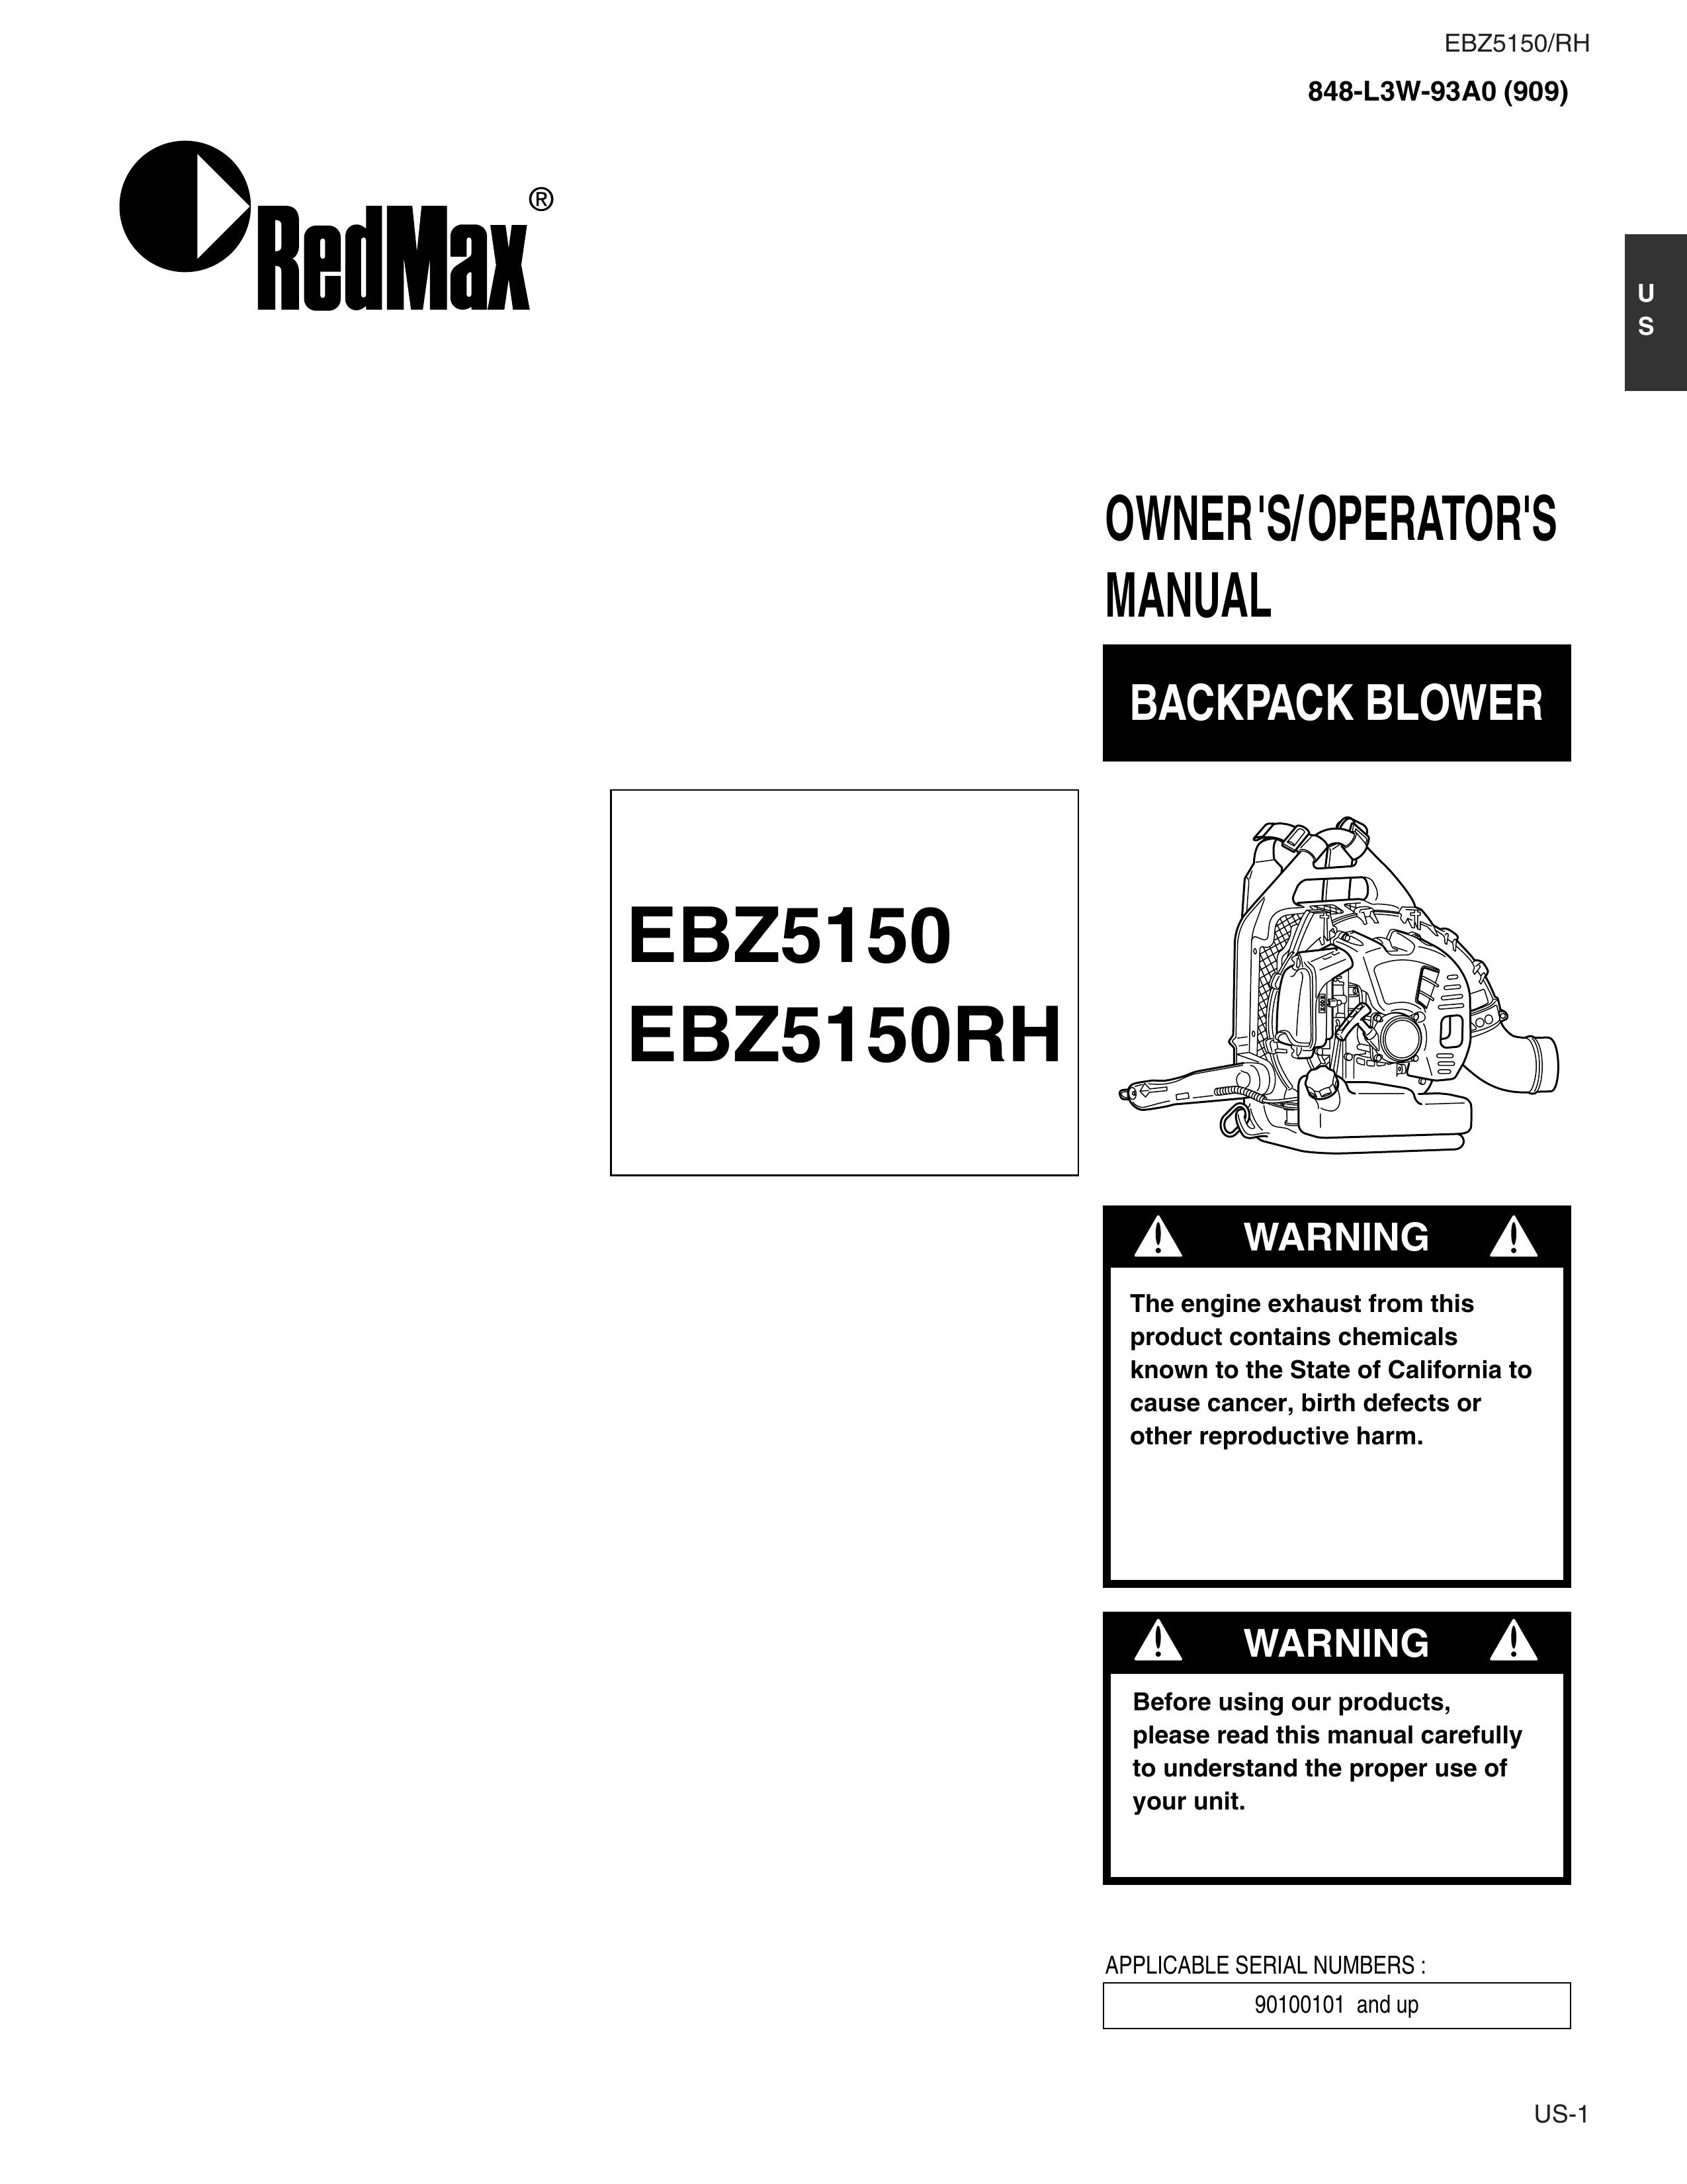 RedMax EBZ5150 Blower User Manual